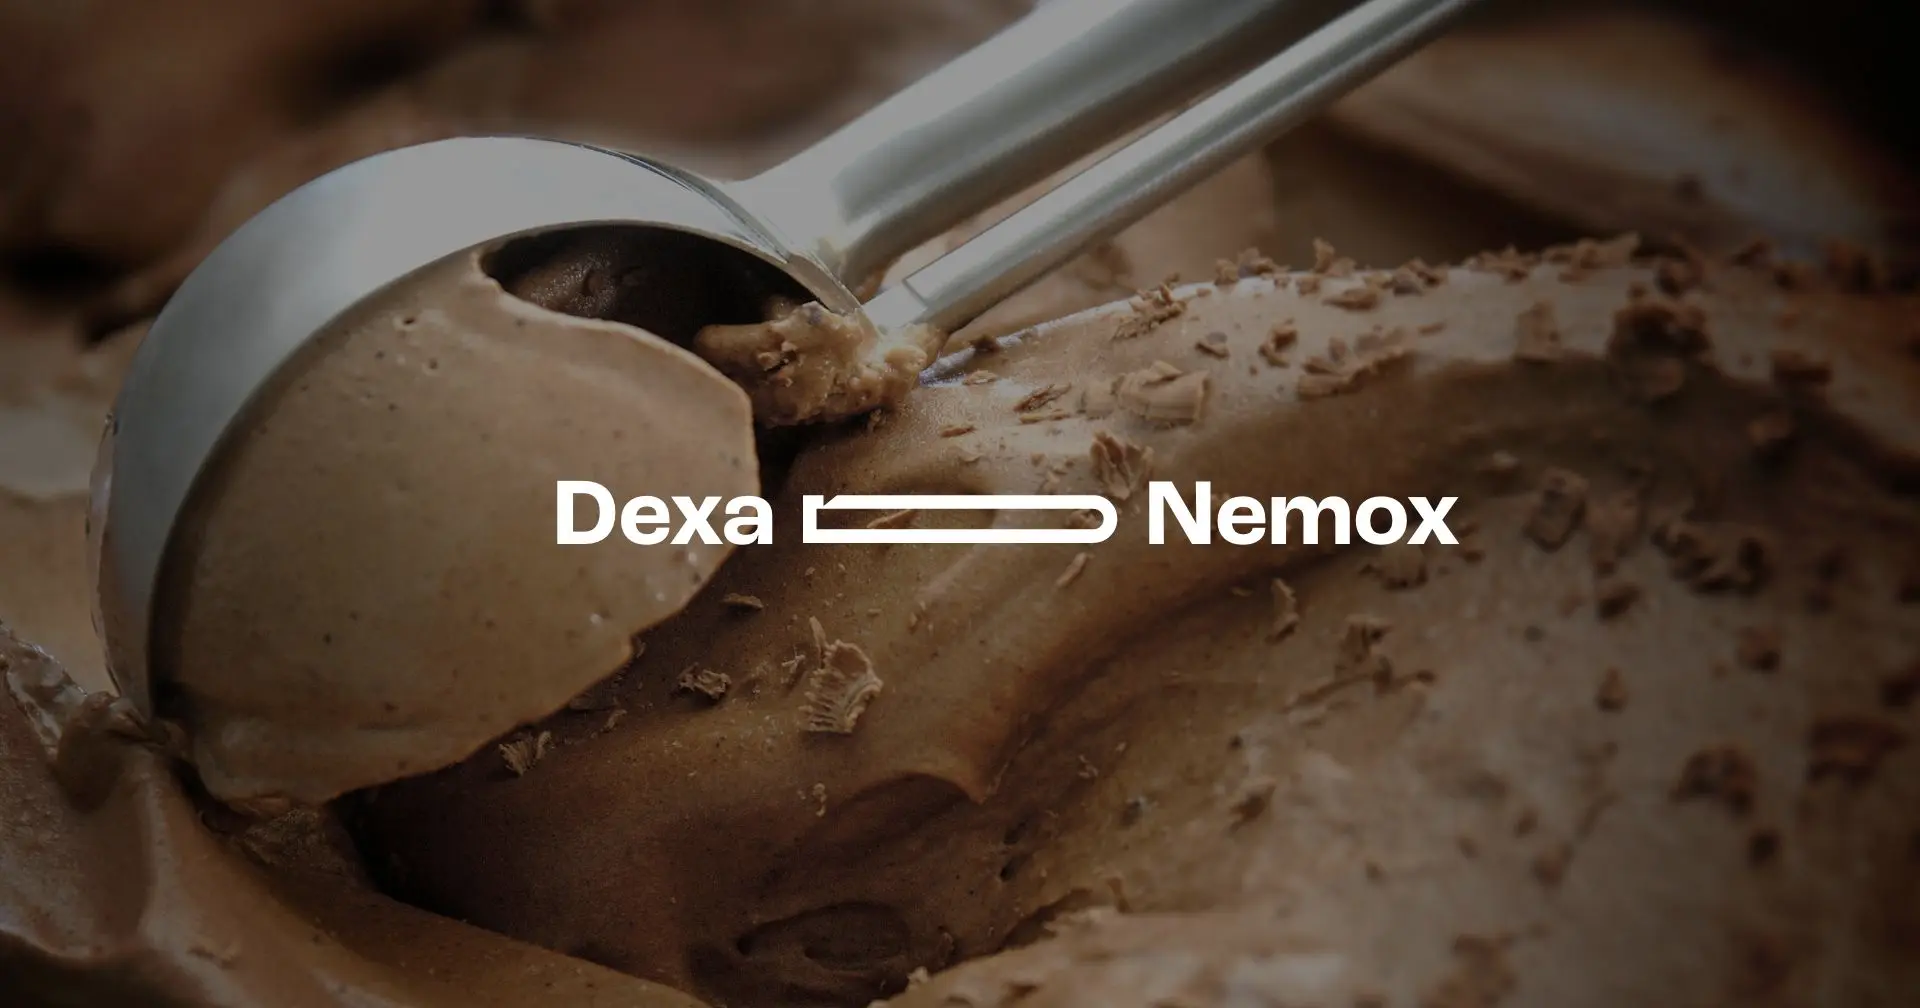 Una campagna “da urlo” per Nemox, produttore di macchine per gelato.